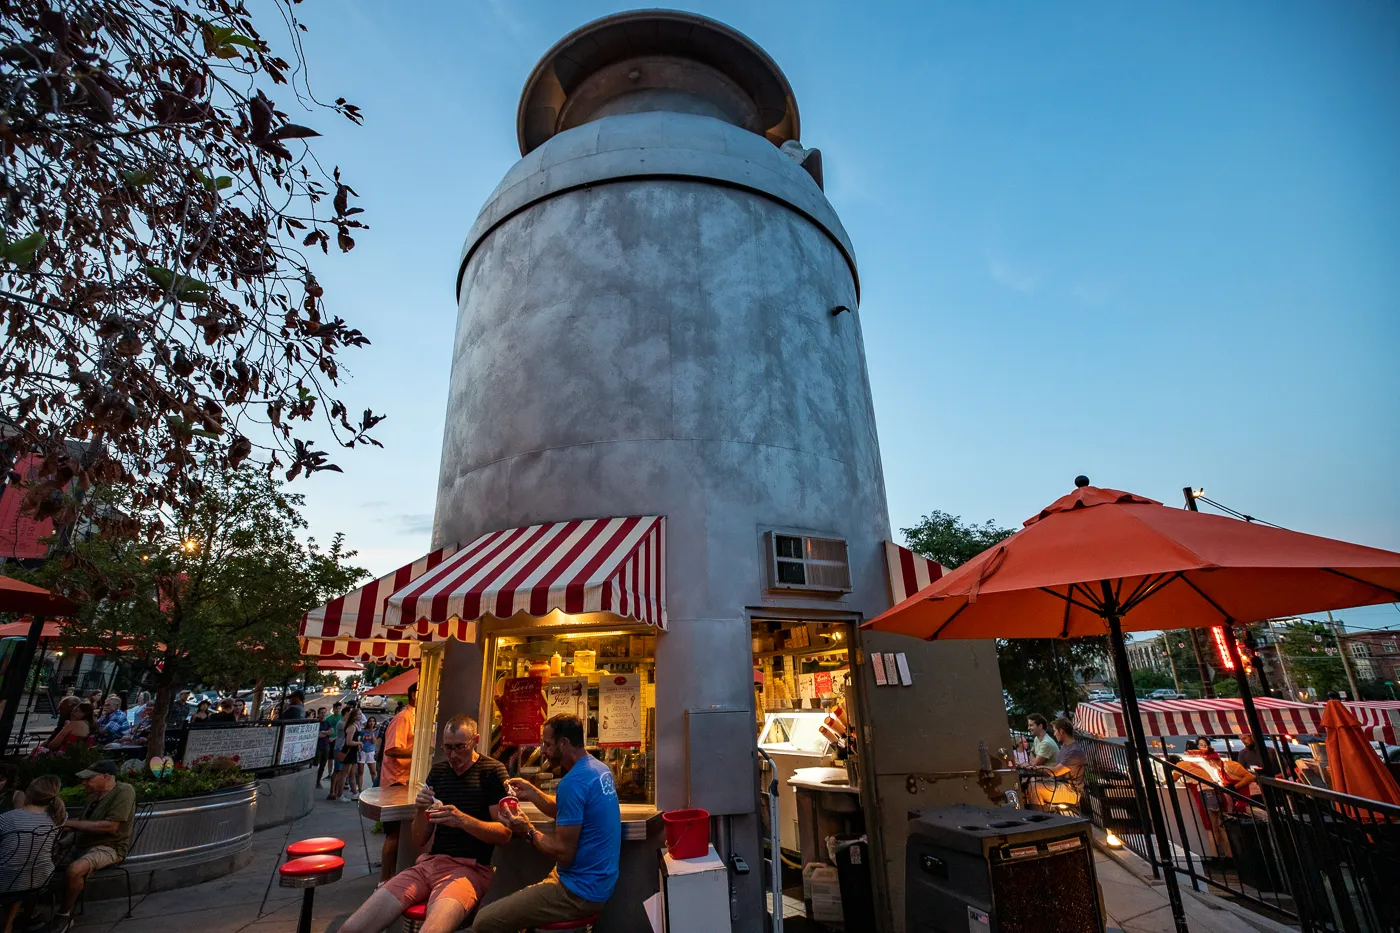 Little Man Ice Cream - Giant Milk Can Ice Cream Shop in Denver, Colorado roadside attraction